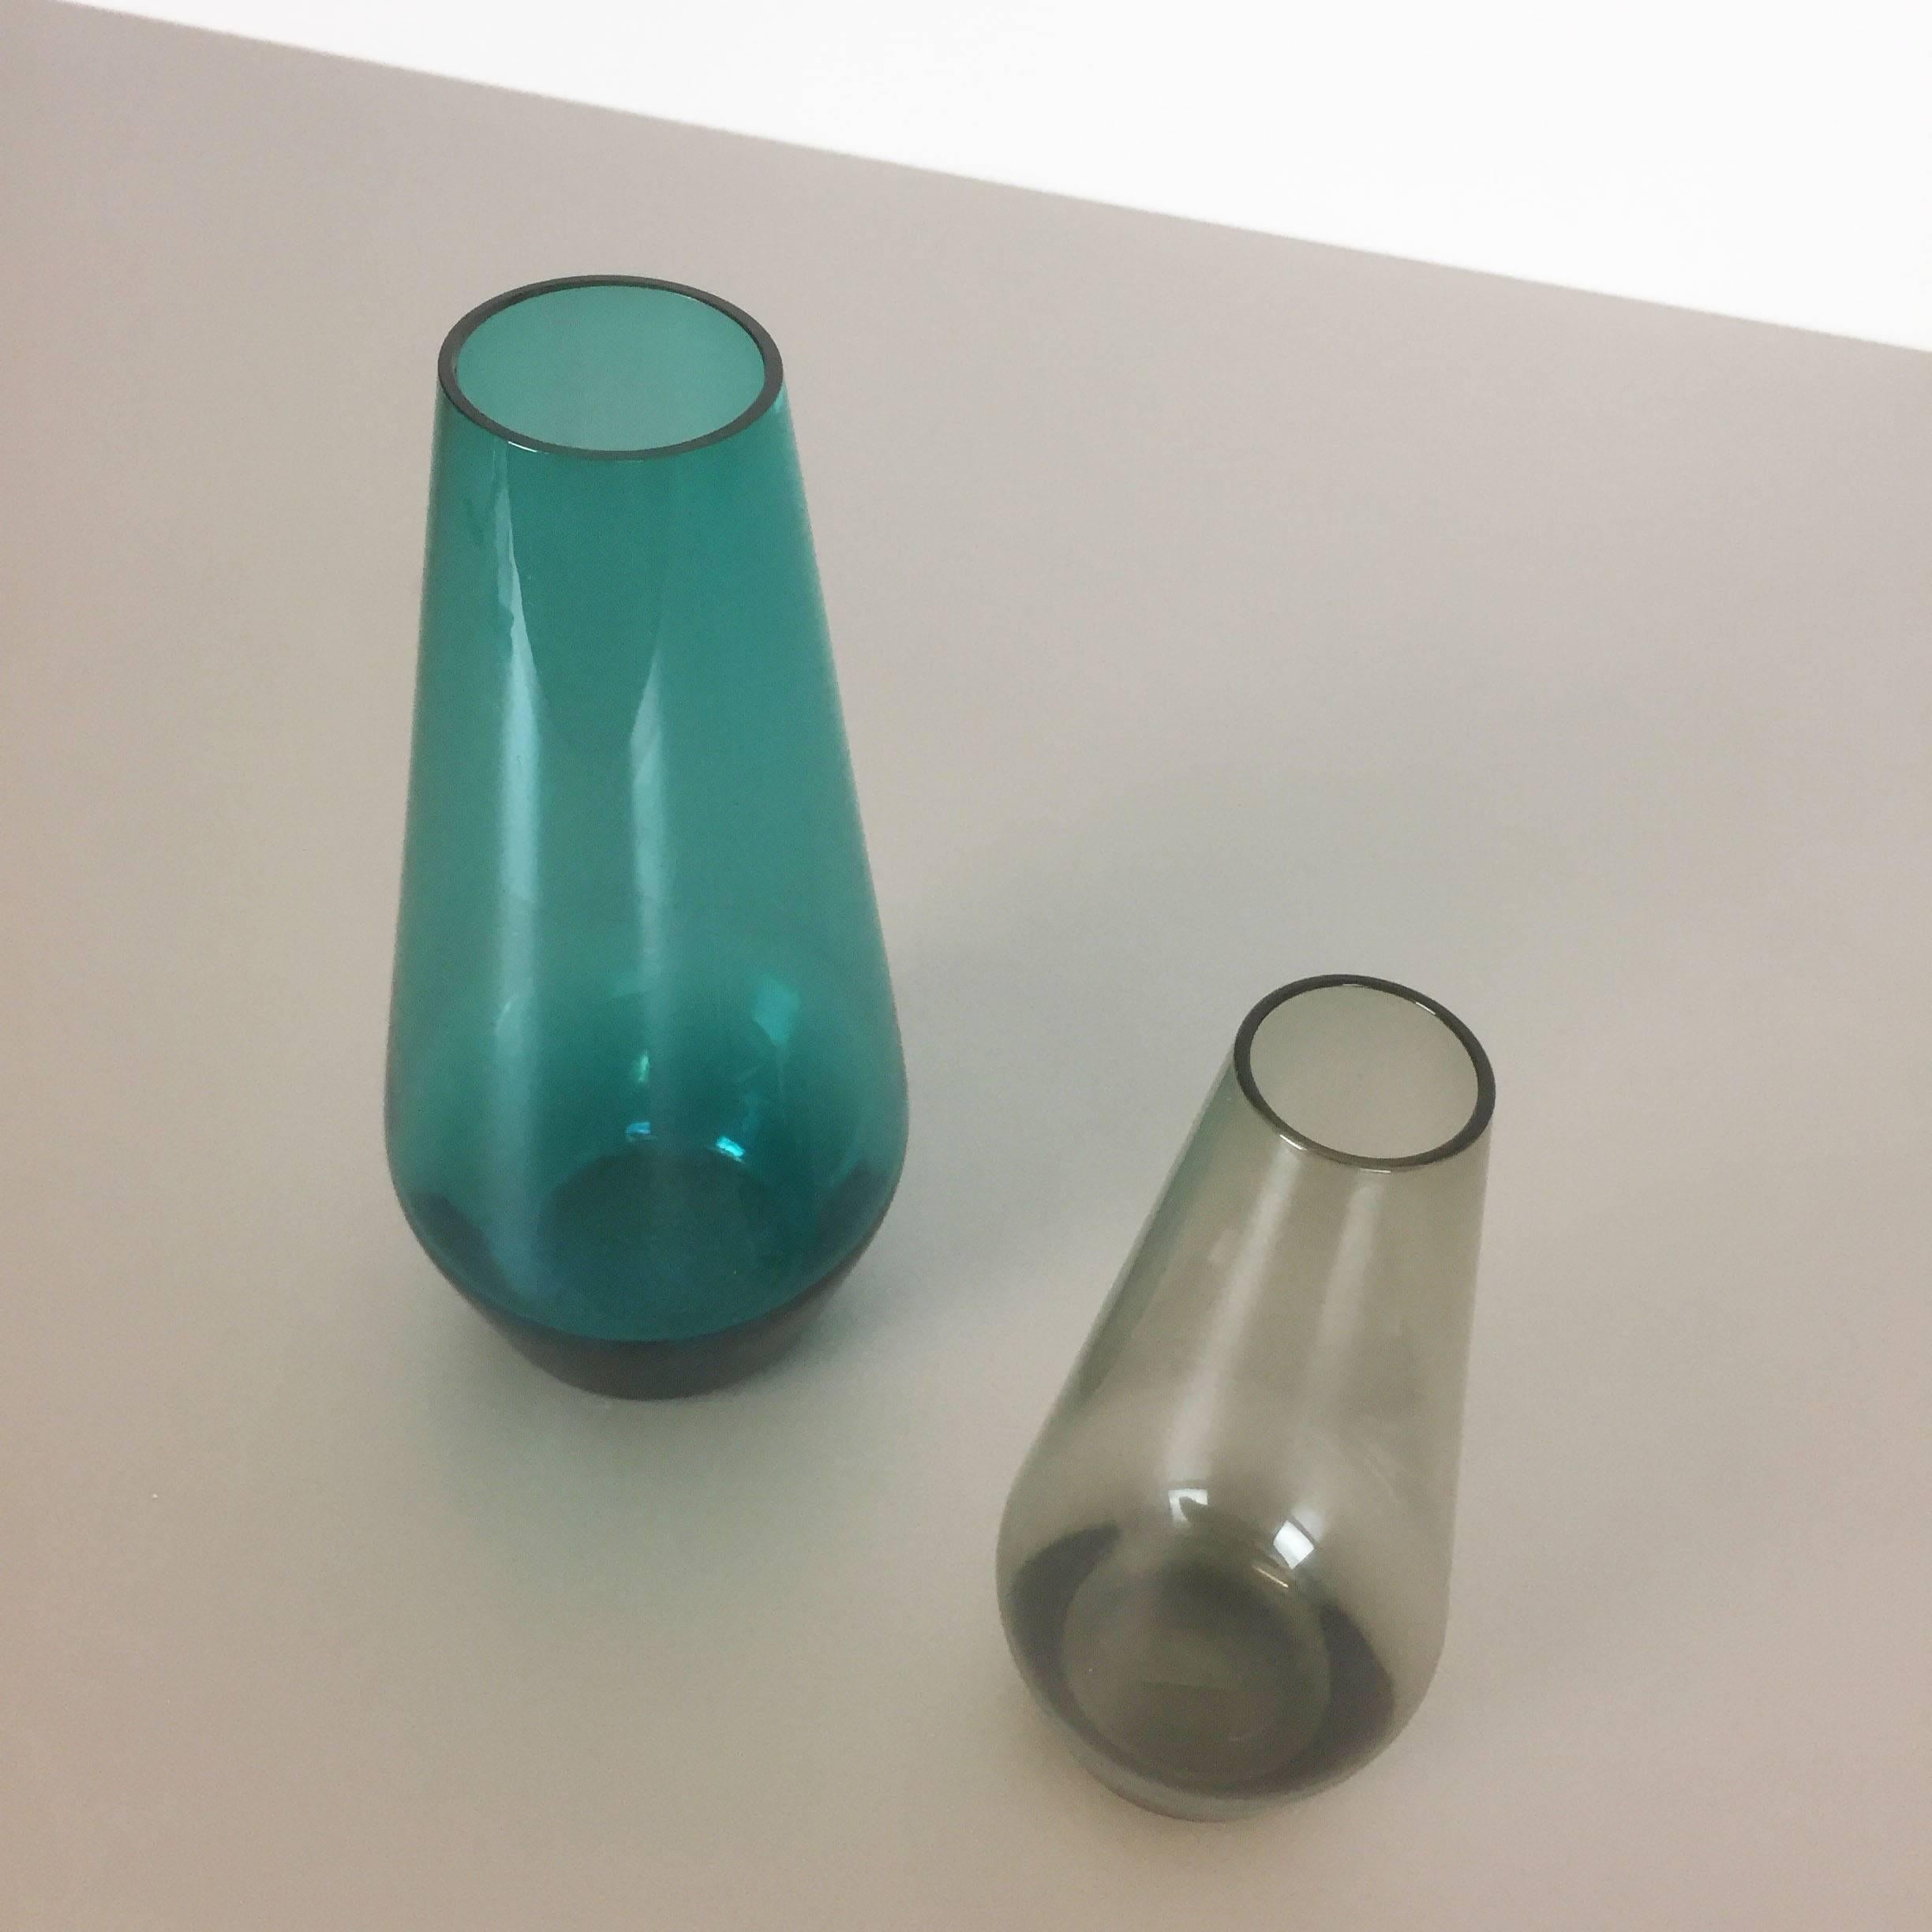 Vintage 1960s Set of Two Turmalin Vases by Wilhelm Wagenfeld for WMF, Germany (Deutsch)